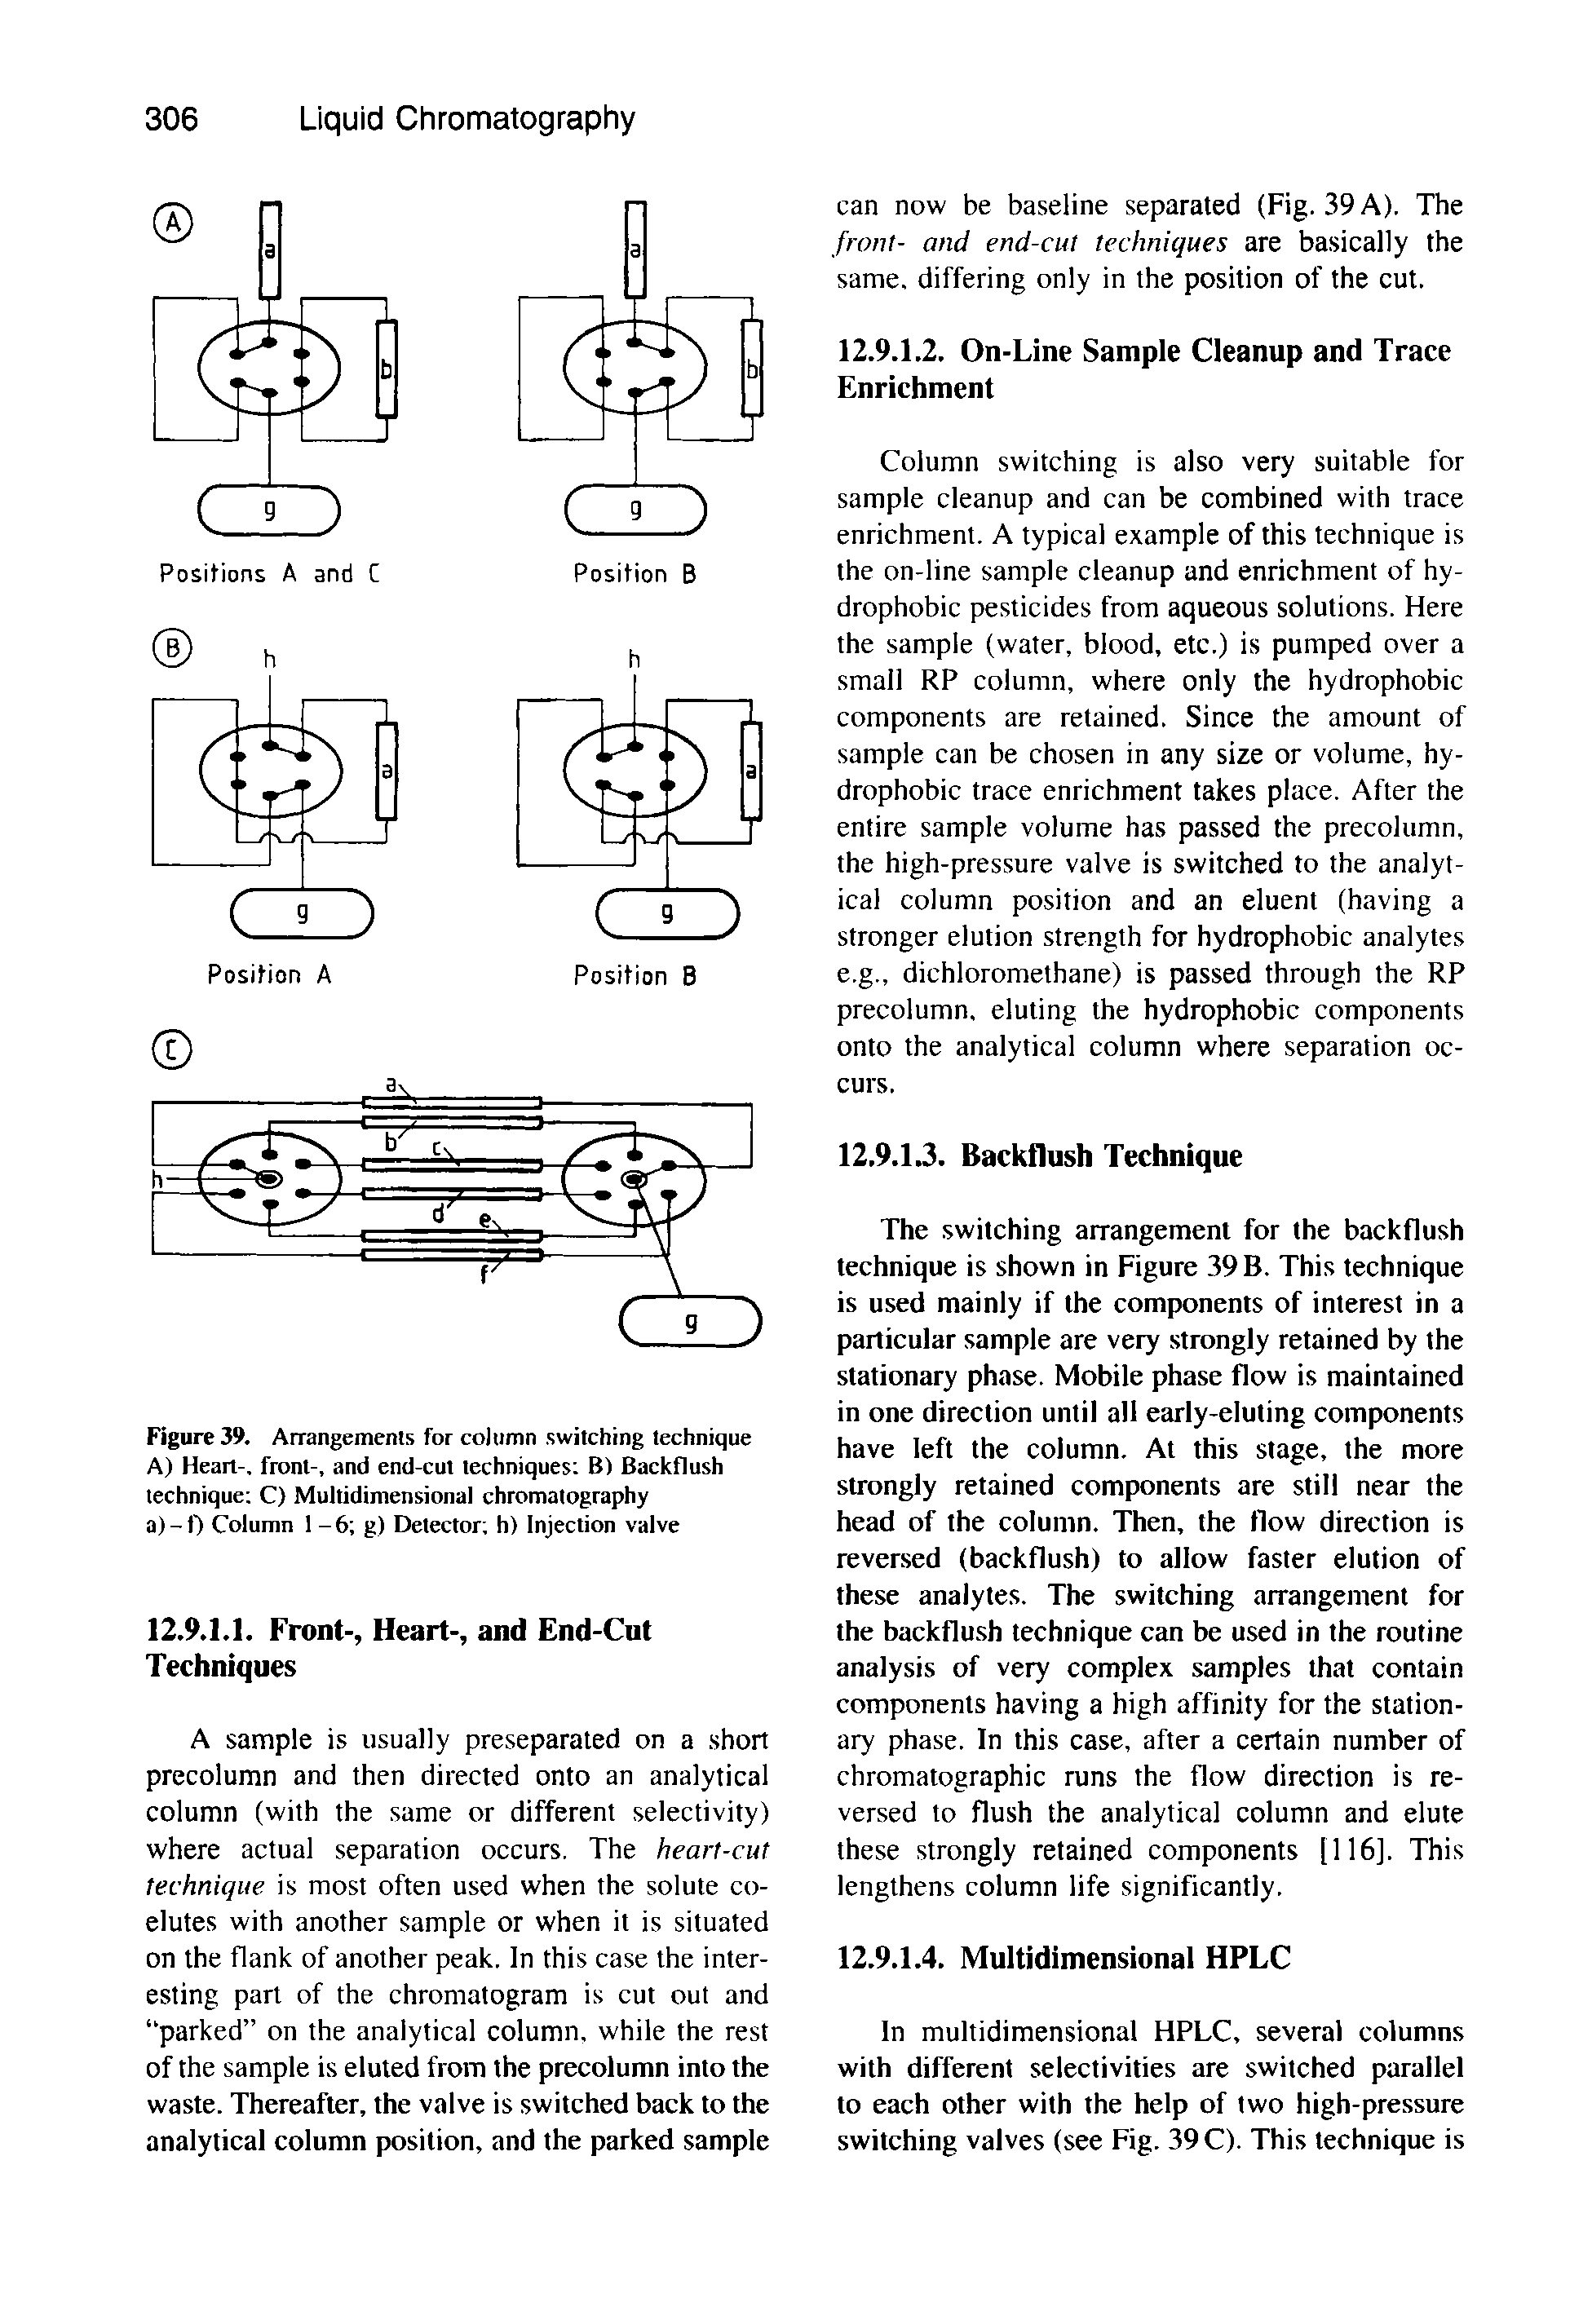 Figure 39. Arrangements for column switching technique A) Heart-, front-, and end-cut techniques B) Backflush technique C) Multidimensional chromatography a)-0 Column 1 -6 g) Detector h) Injection valve...